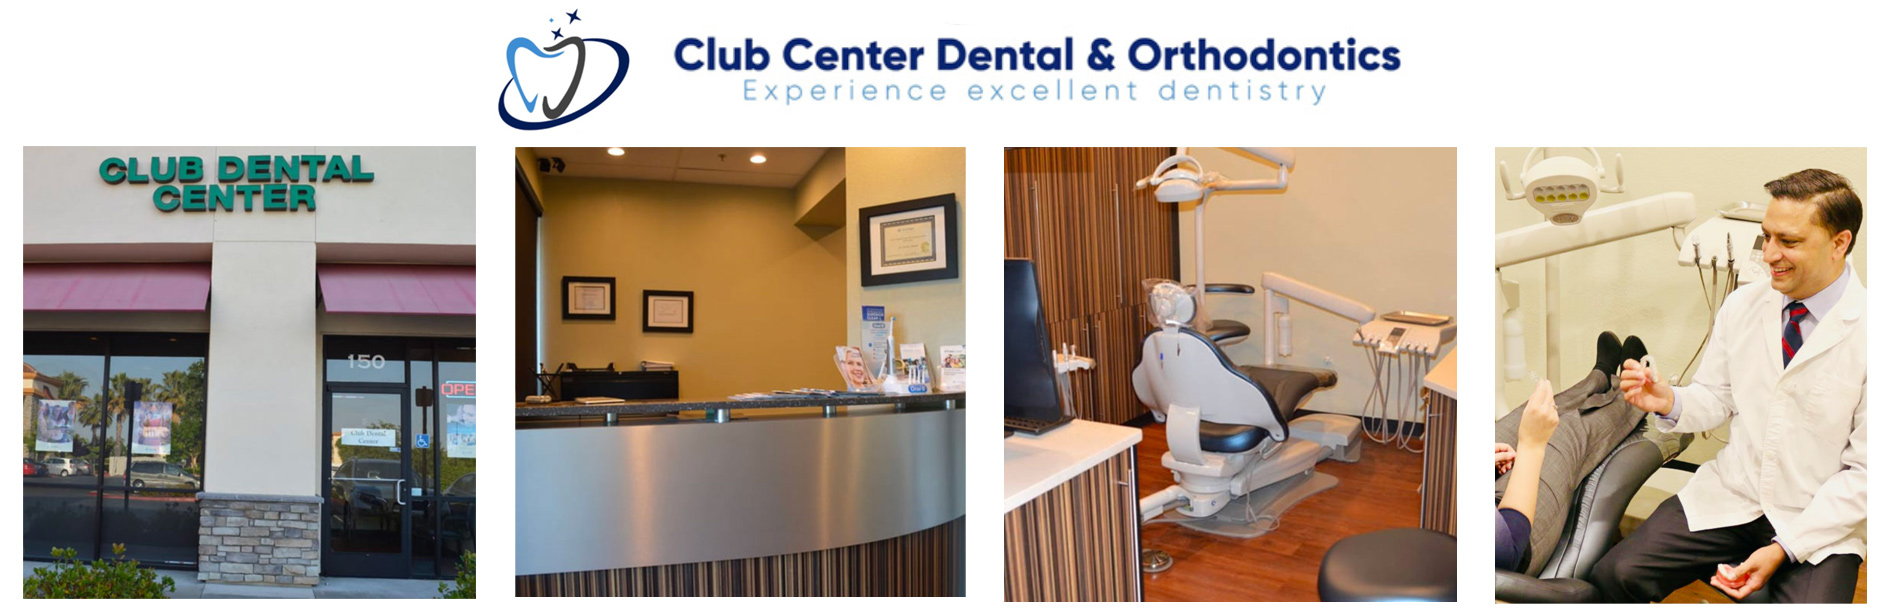 Club Center Dental & Orthodontics Sacramento, CA 95835, Rooprai Dental